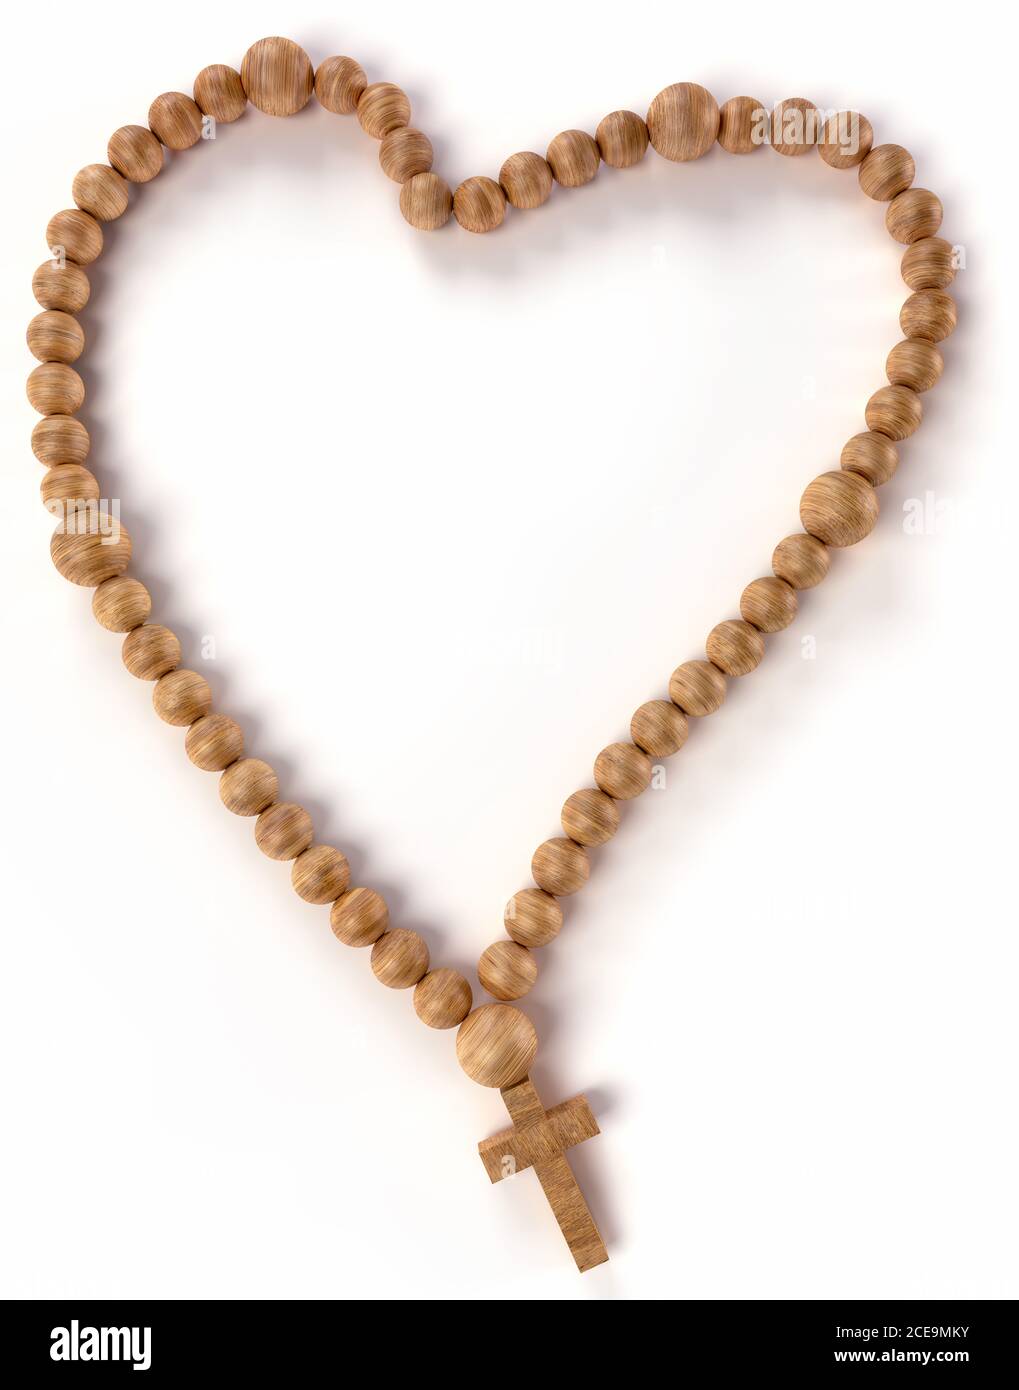 Chaplet or rosary beads heart shape Stock Photo